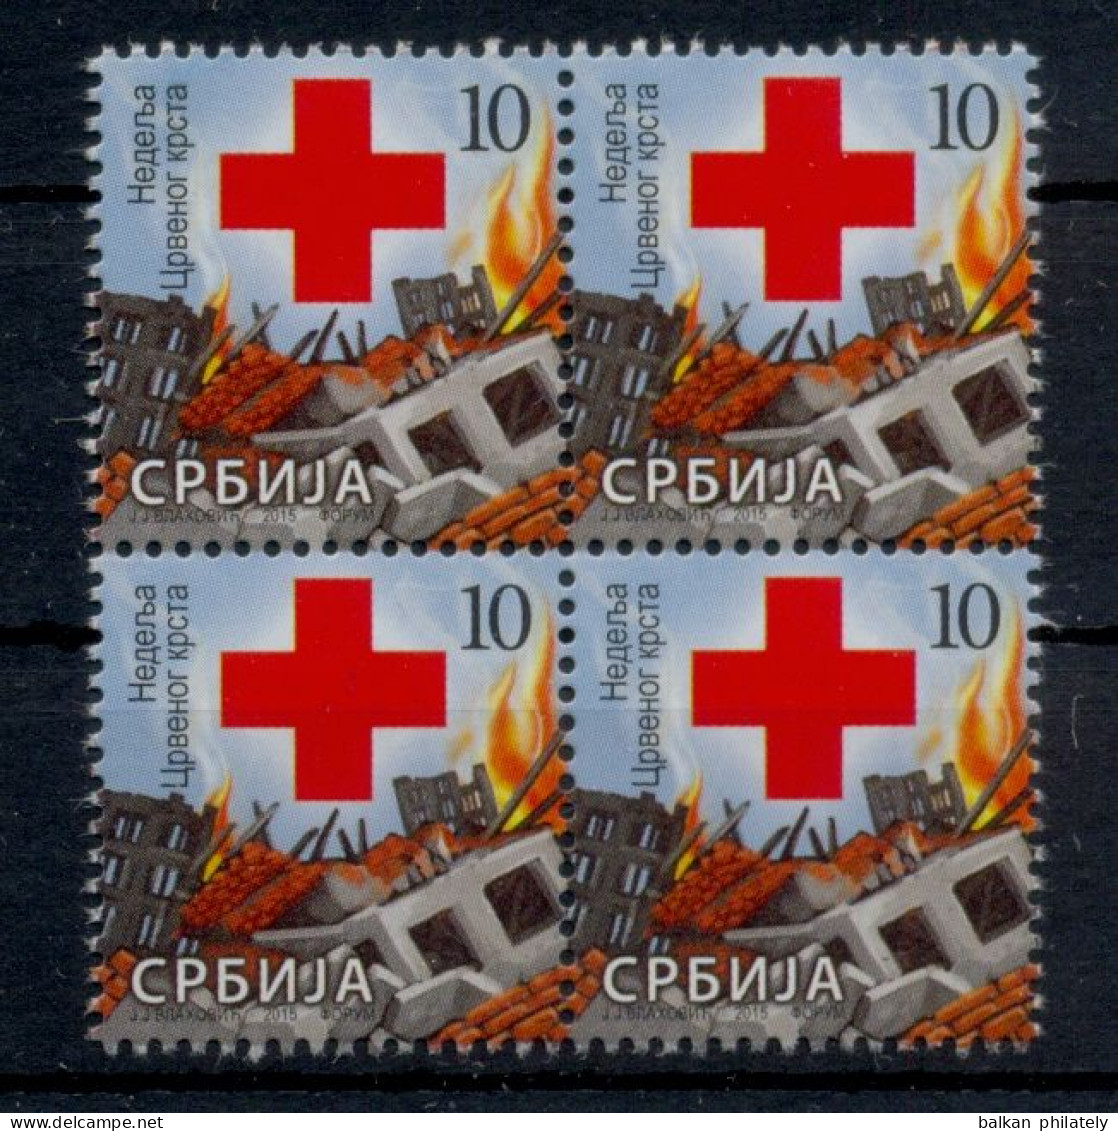 Serbia 2015 Red Cross Week Croix Rouge Rotes Kreuz Cruz Roja Croce Rossa Tax Charity Surcharge MNH - Serbie